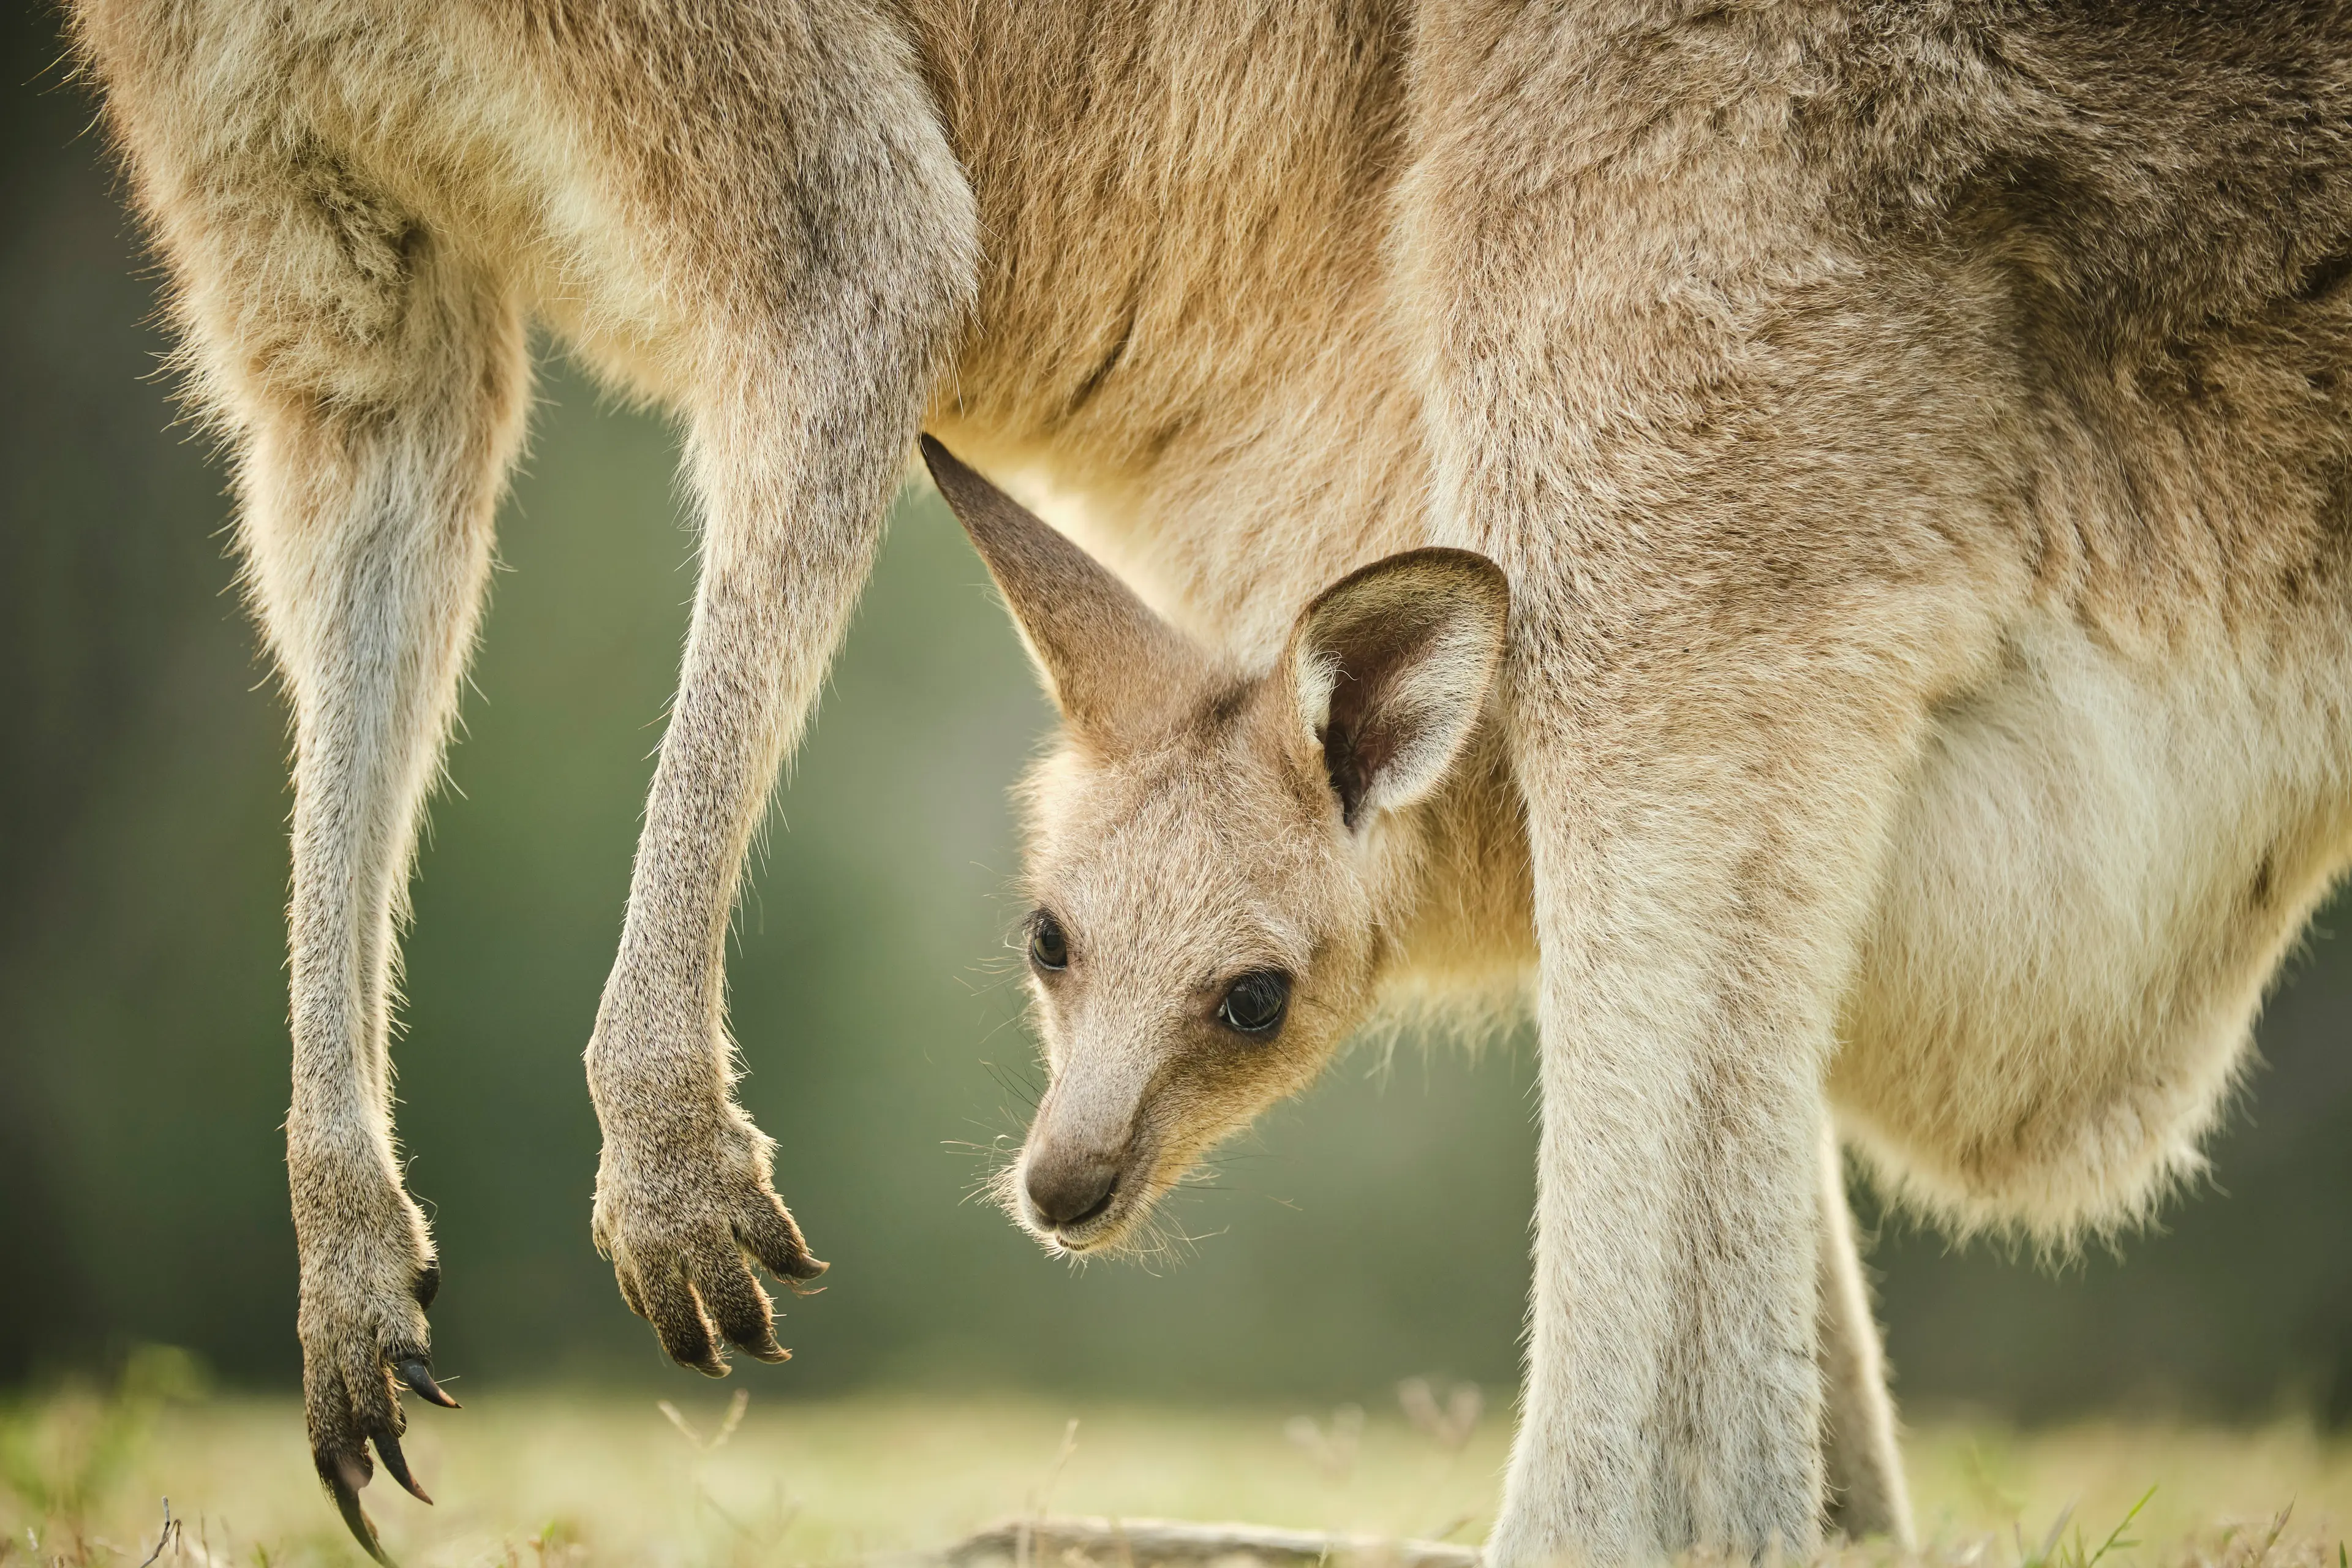 Wild kangaroo joey in open grass field